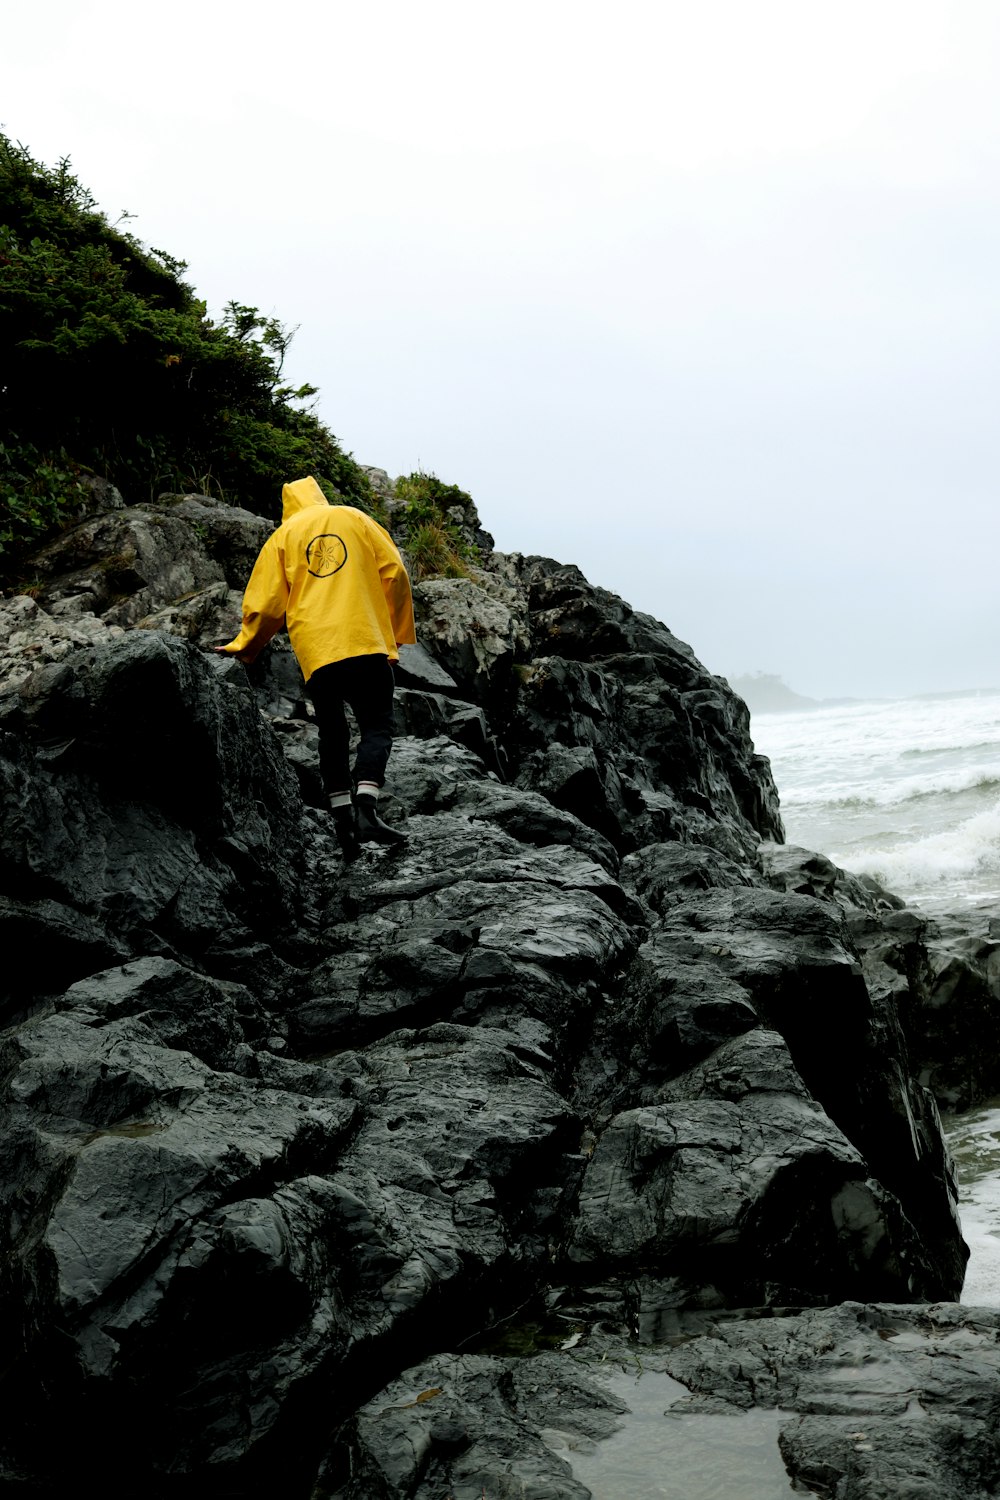 a person in a yellow jacket walking on rocks near the ocean